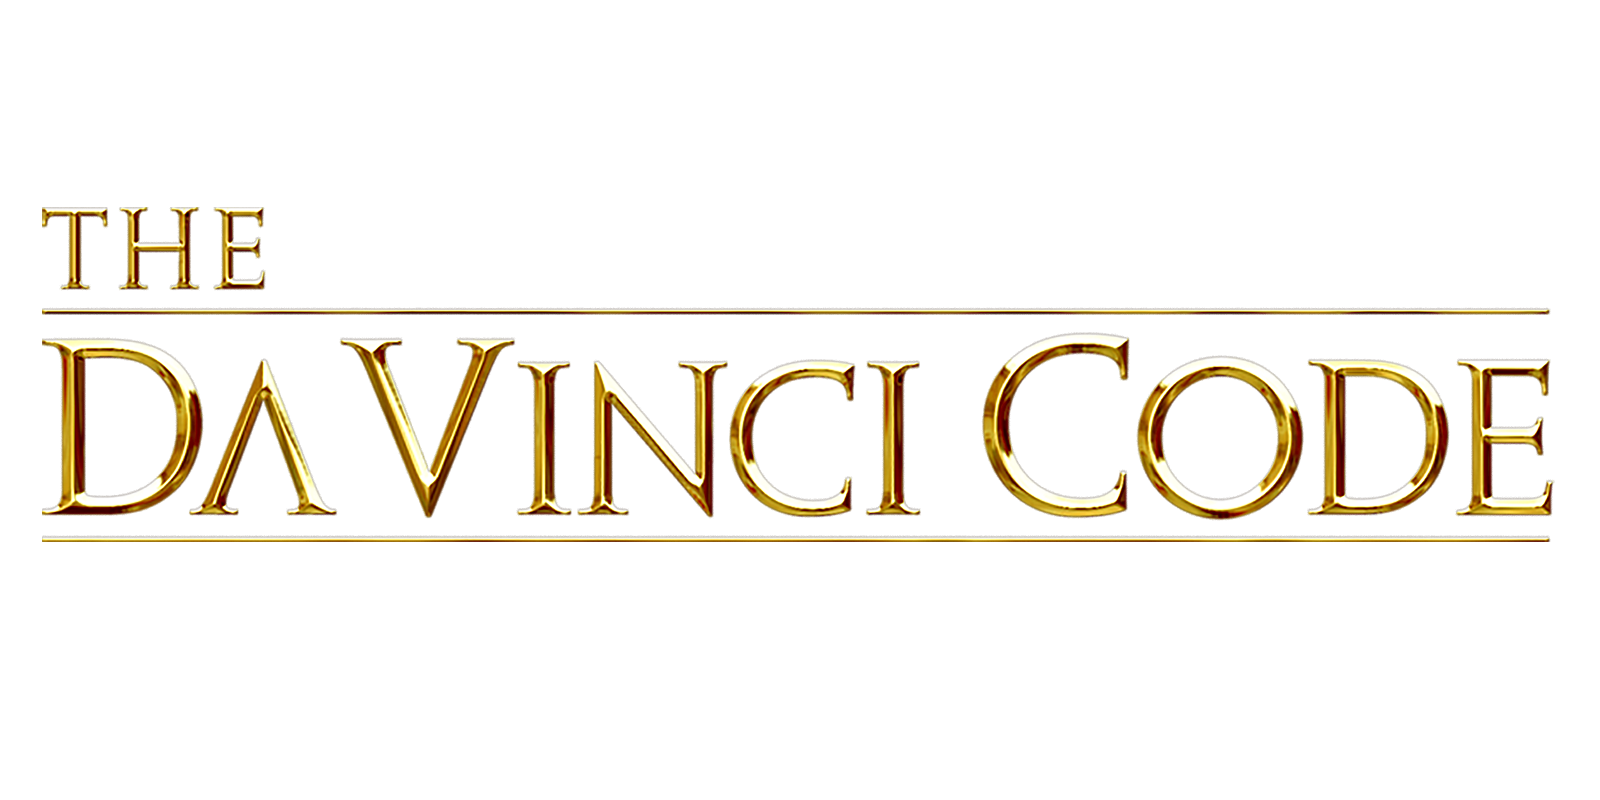 watch the da vinci code full movie free online